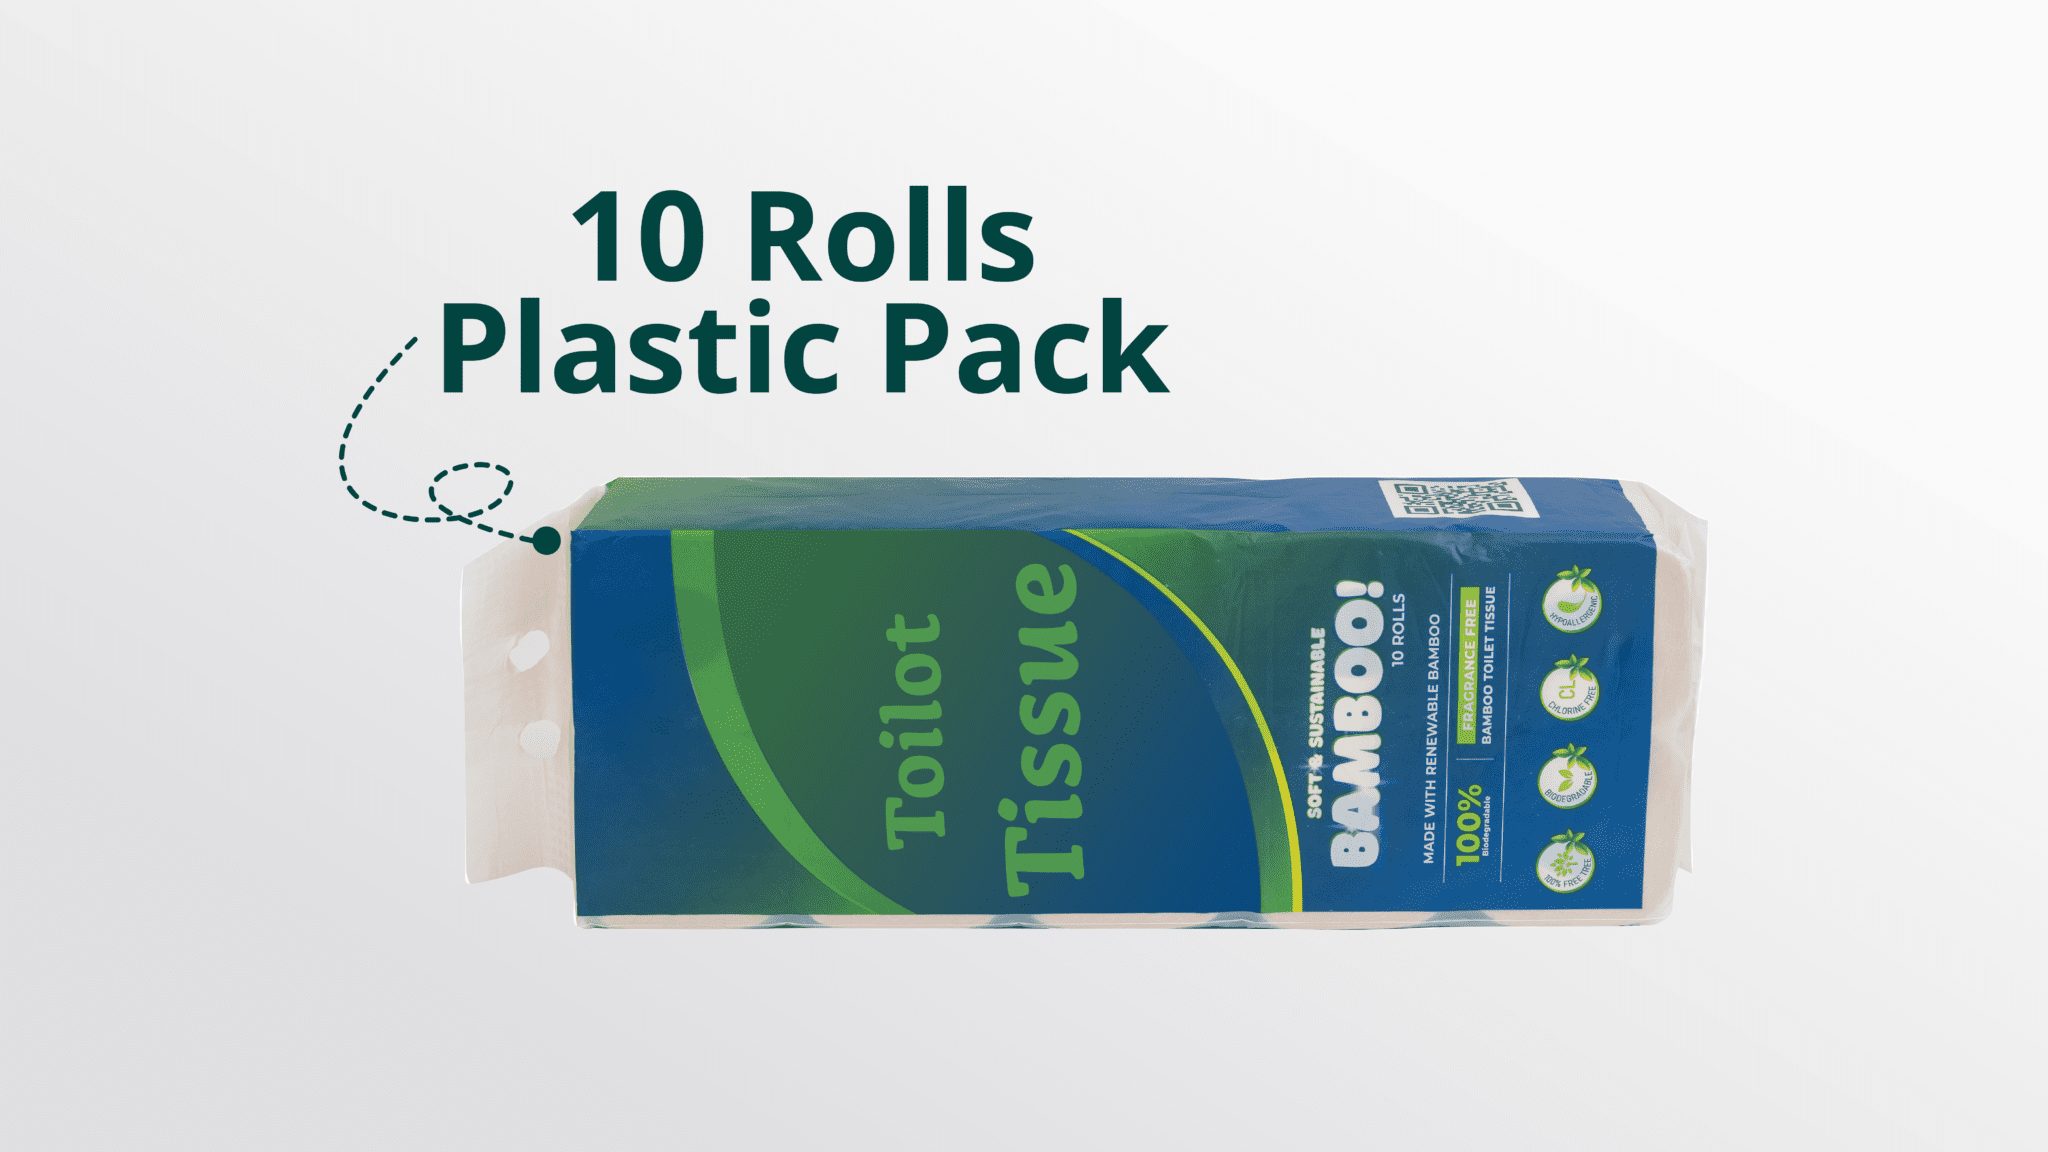 10 rolls plastic pack toilet paper